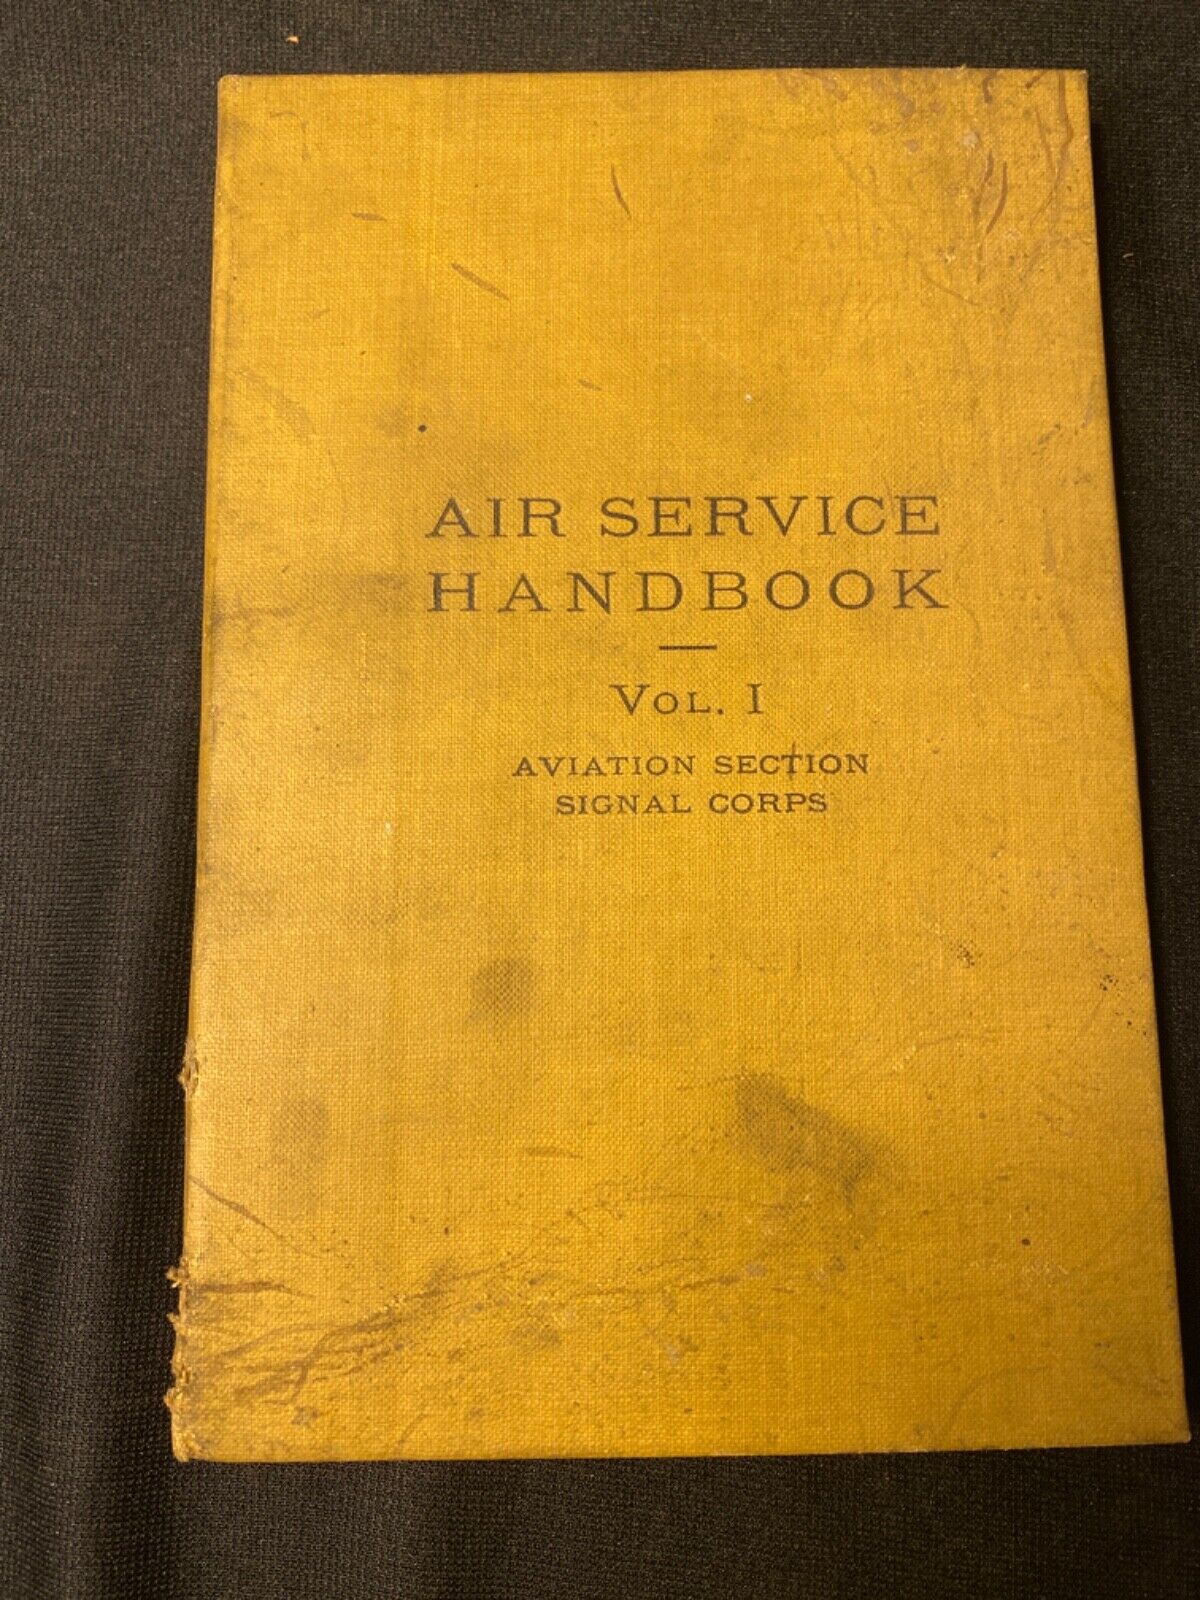 1918 Air Service Handbook Vol. 1 Aviation Section Signal Corps 